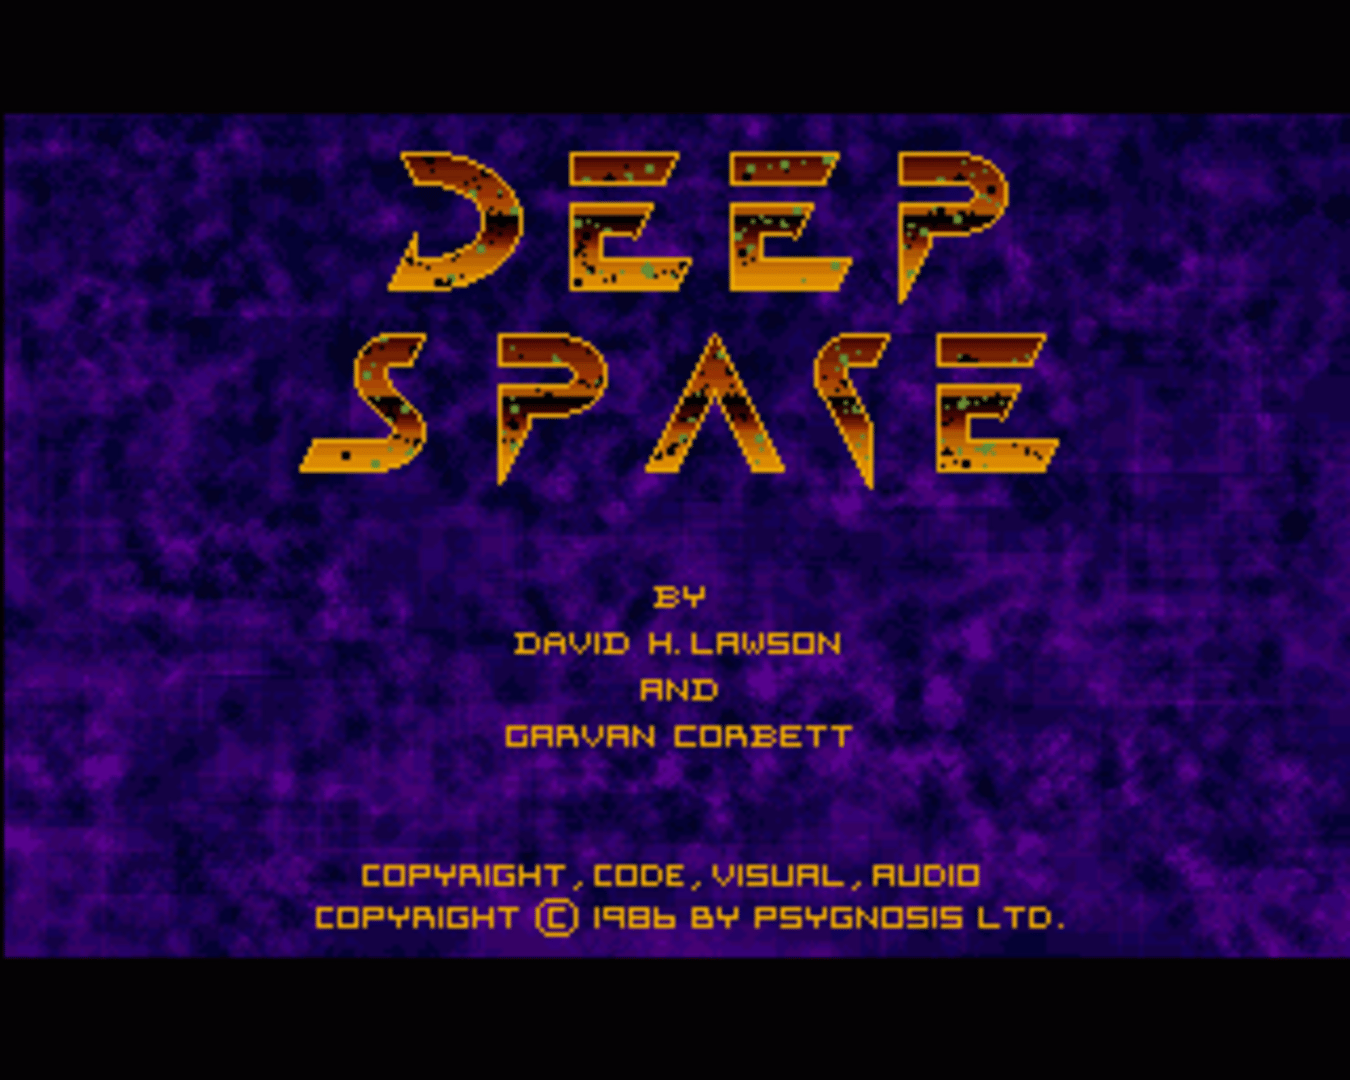 Deep Space screenshot